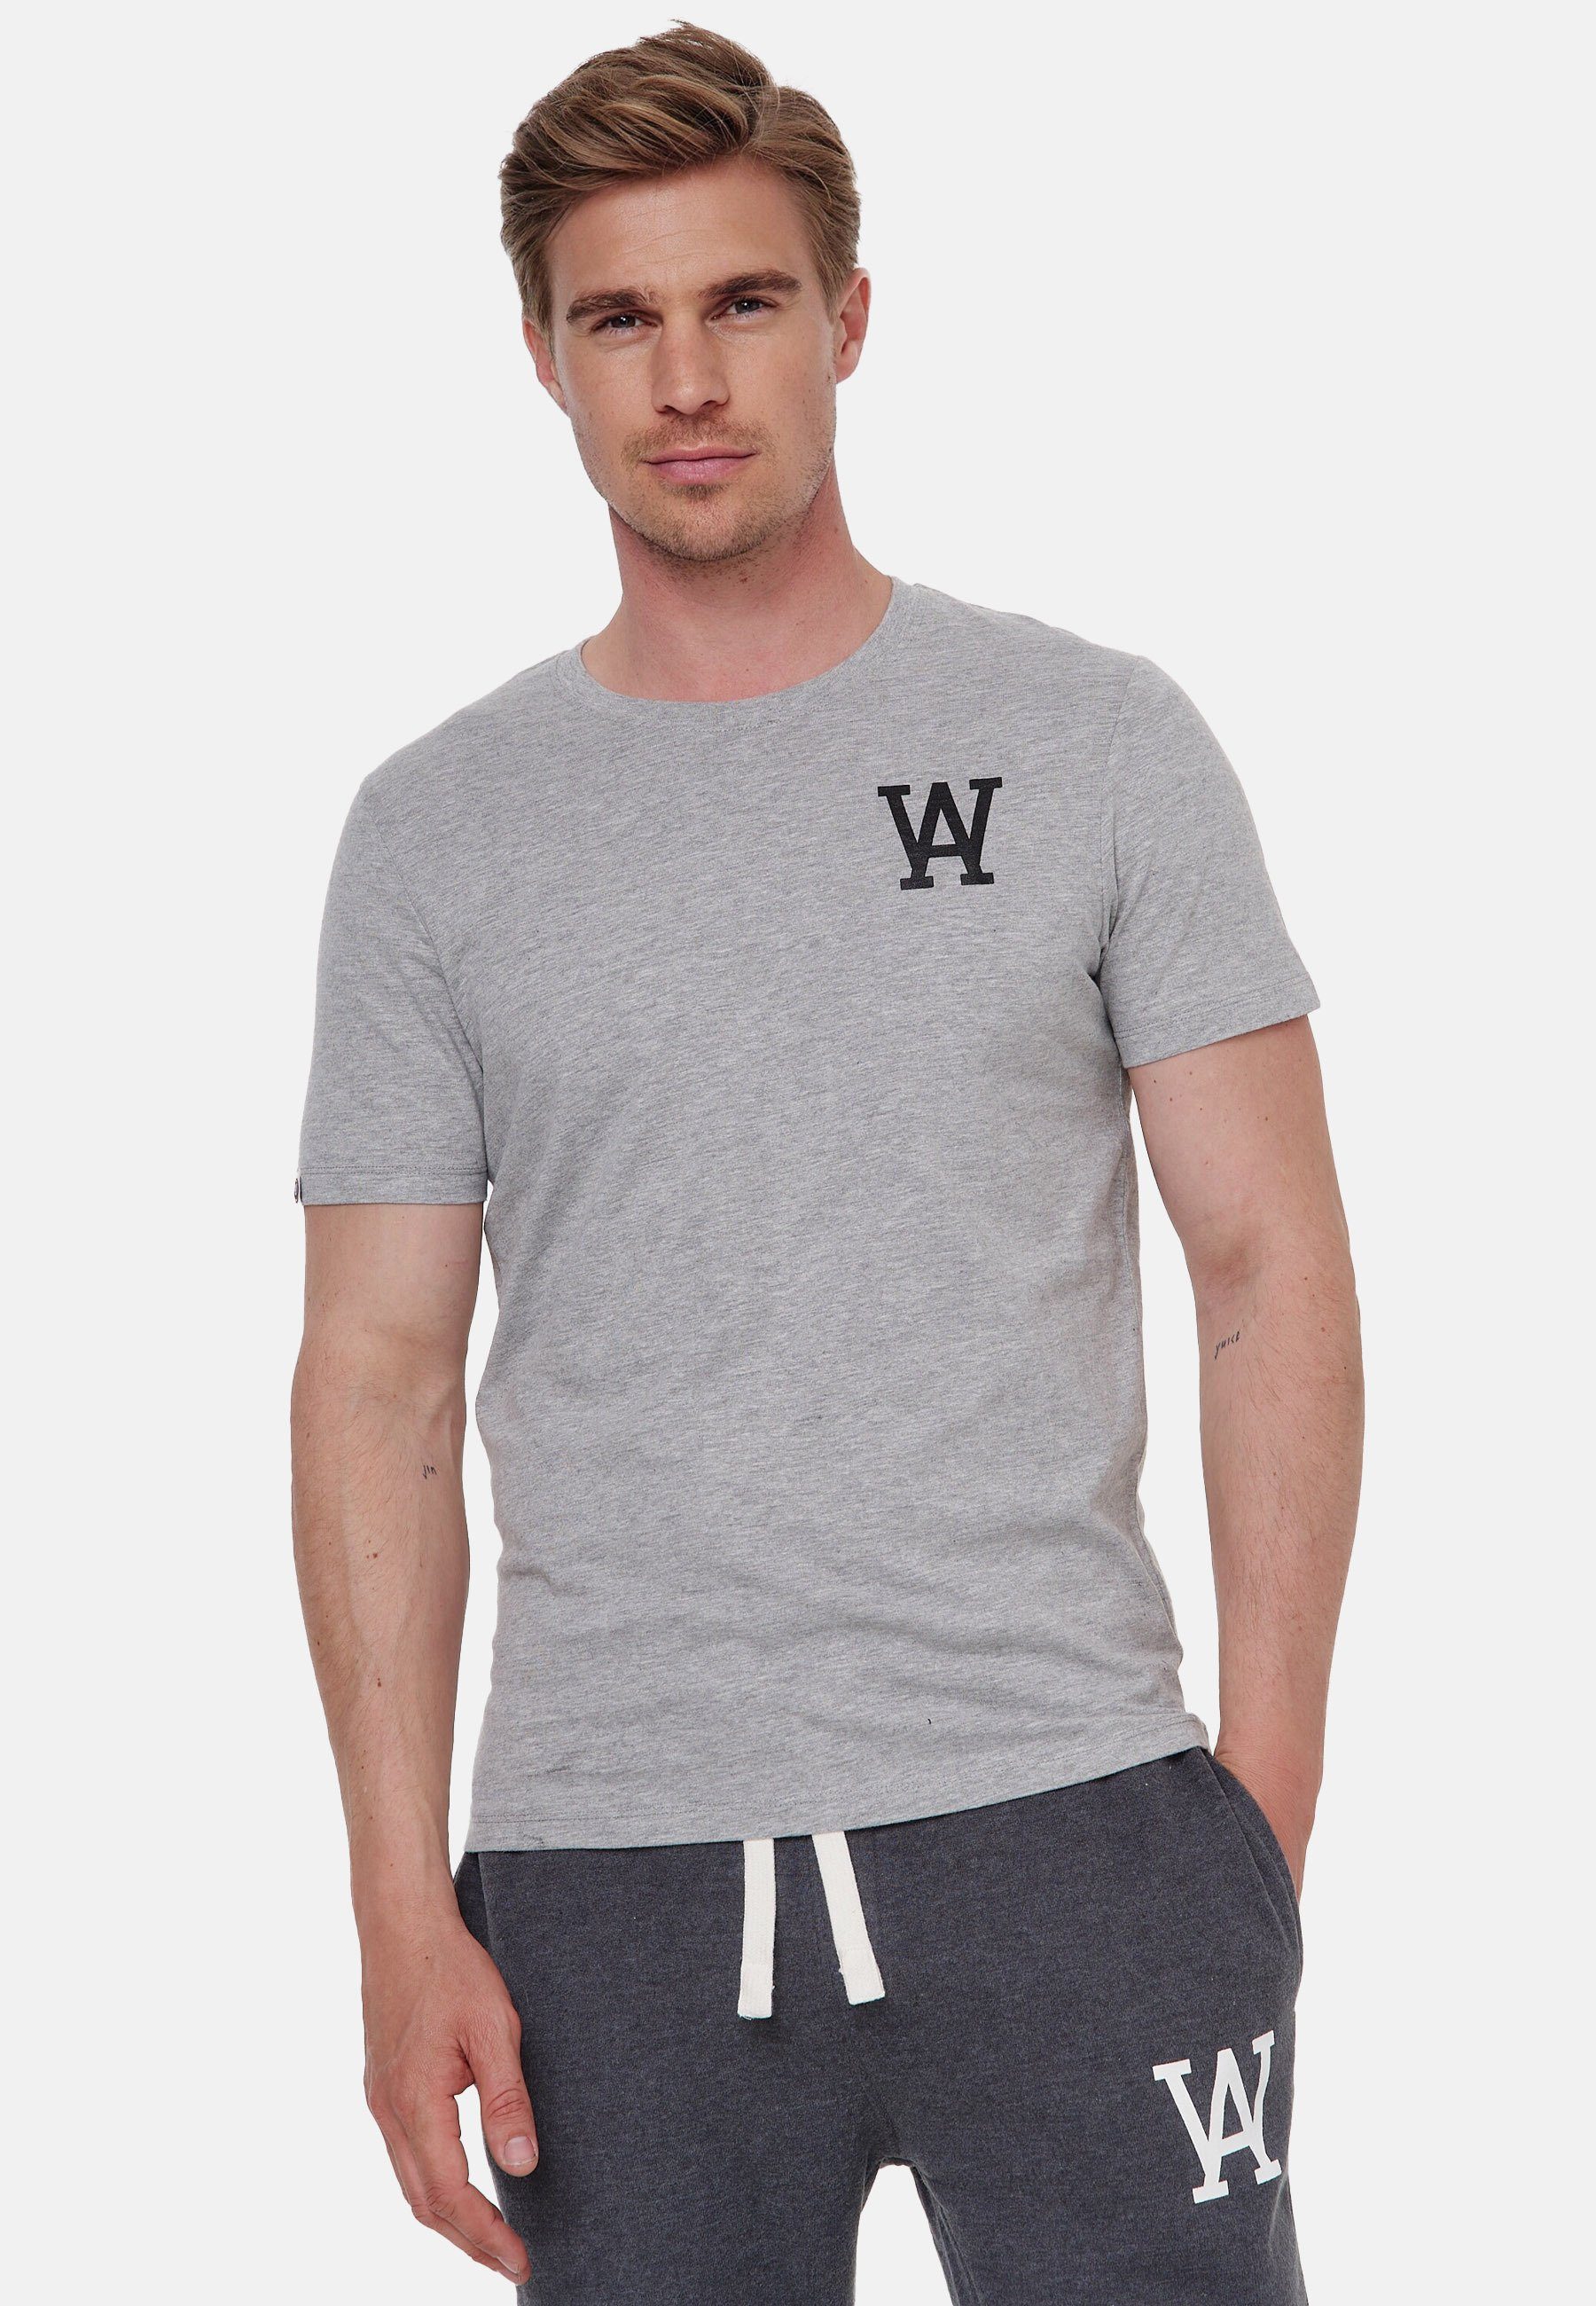 Woldo Athletic T-Shirt T-Shirt W Logo grau-schwarz